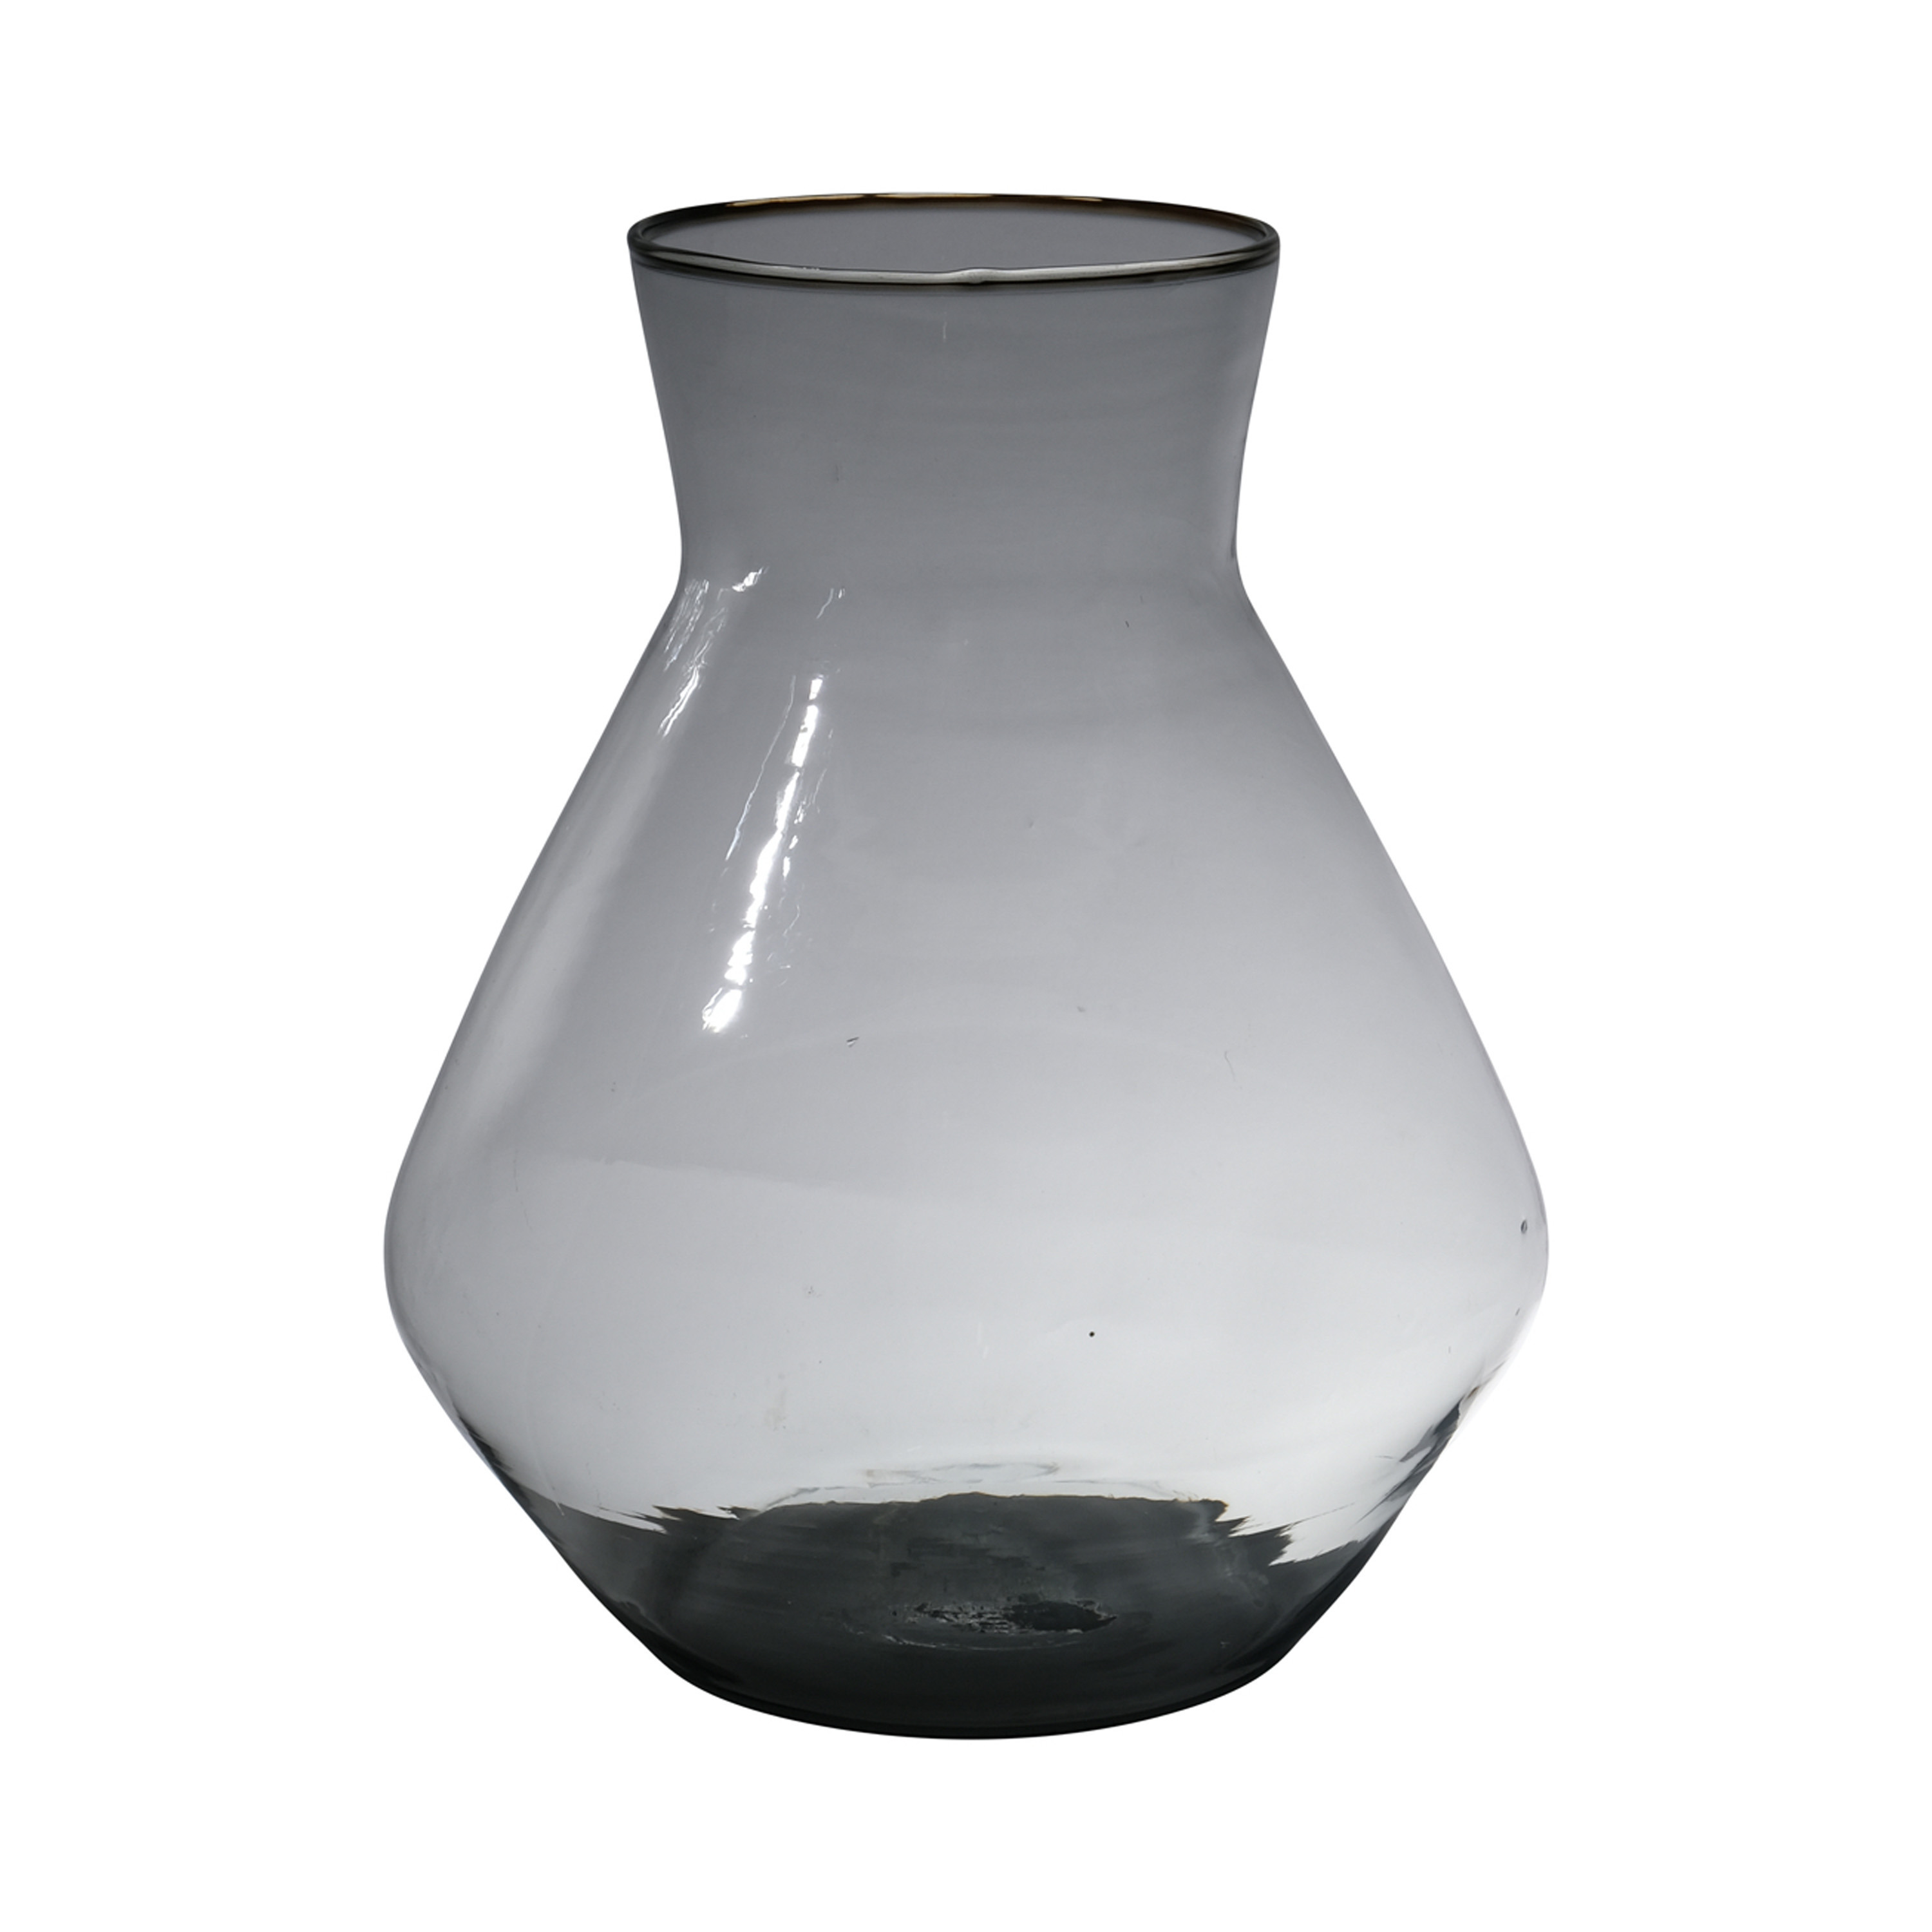 Hakbijl Glass Bloemenvaas Alexandra transparant zwart eco glas D25 x H30 cm - smoke glas